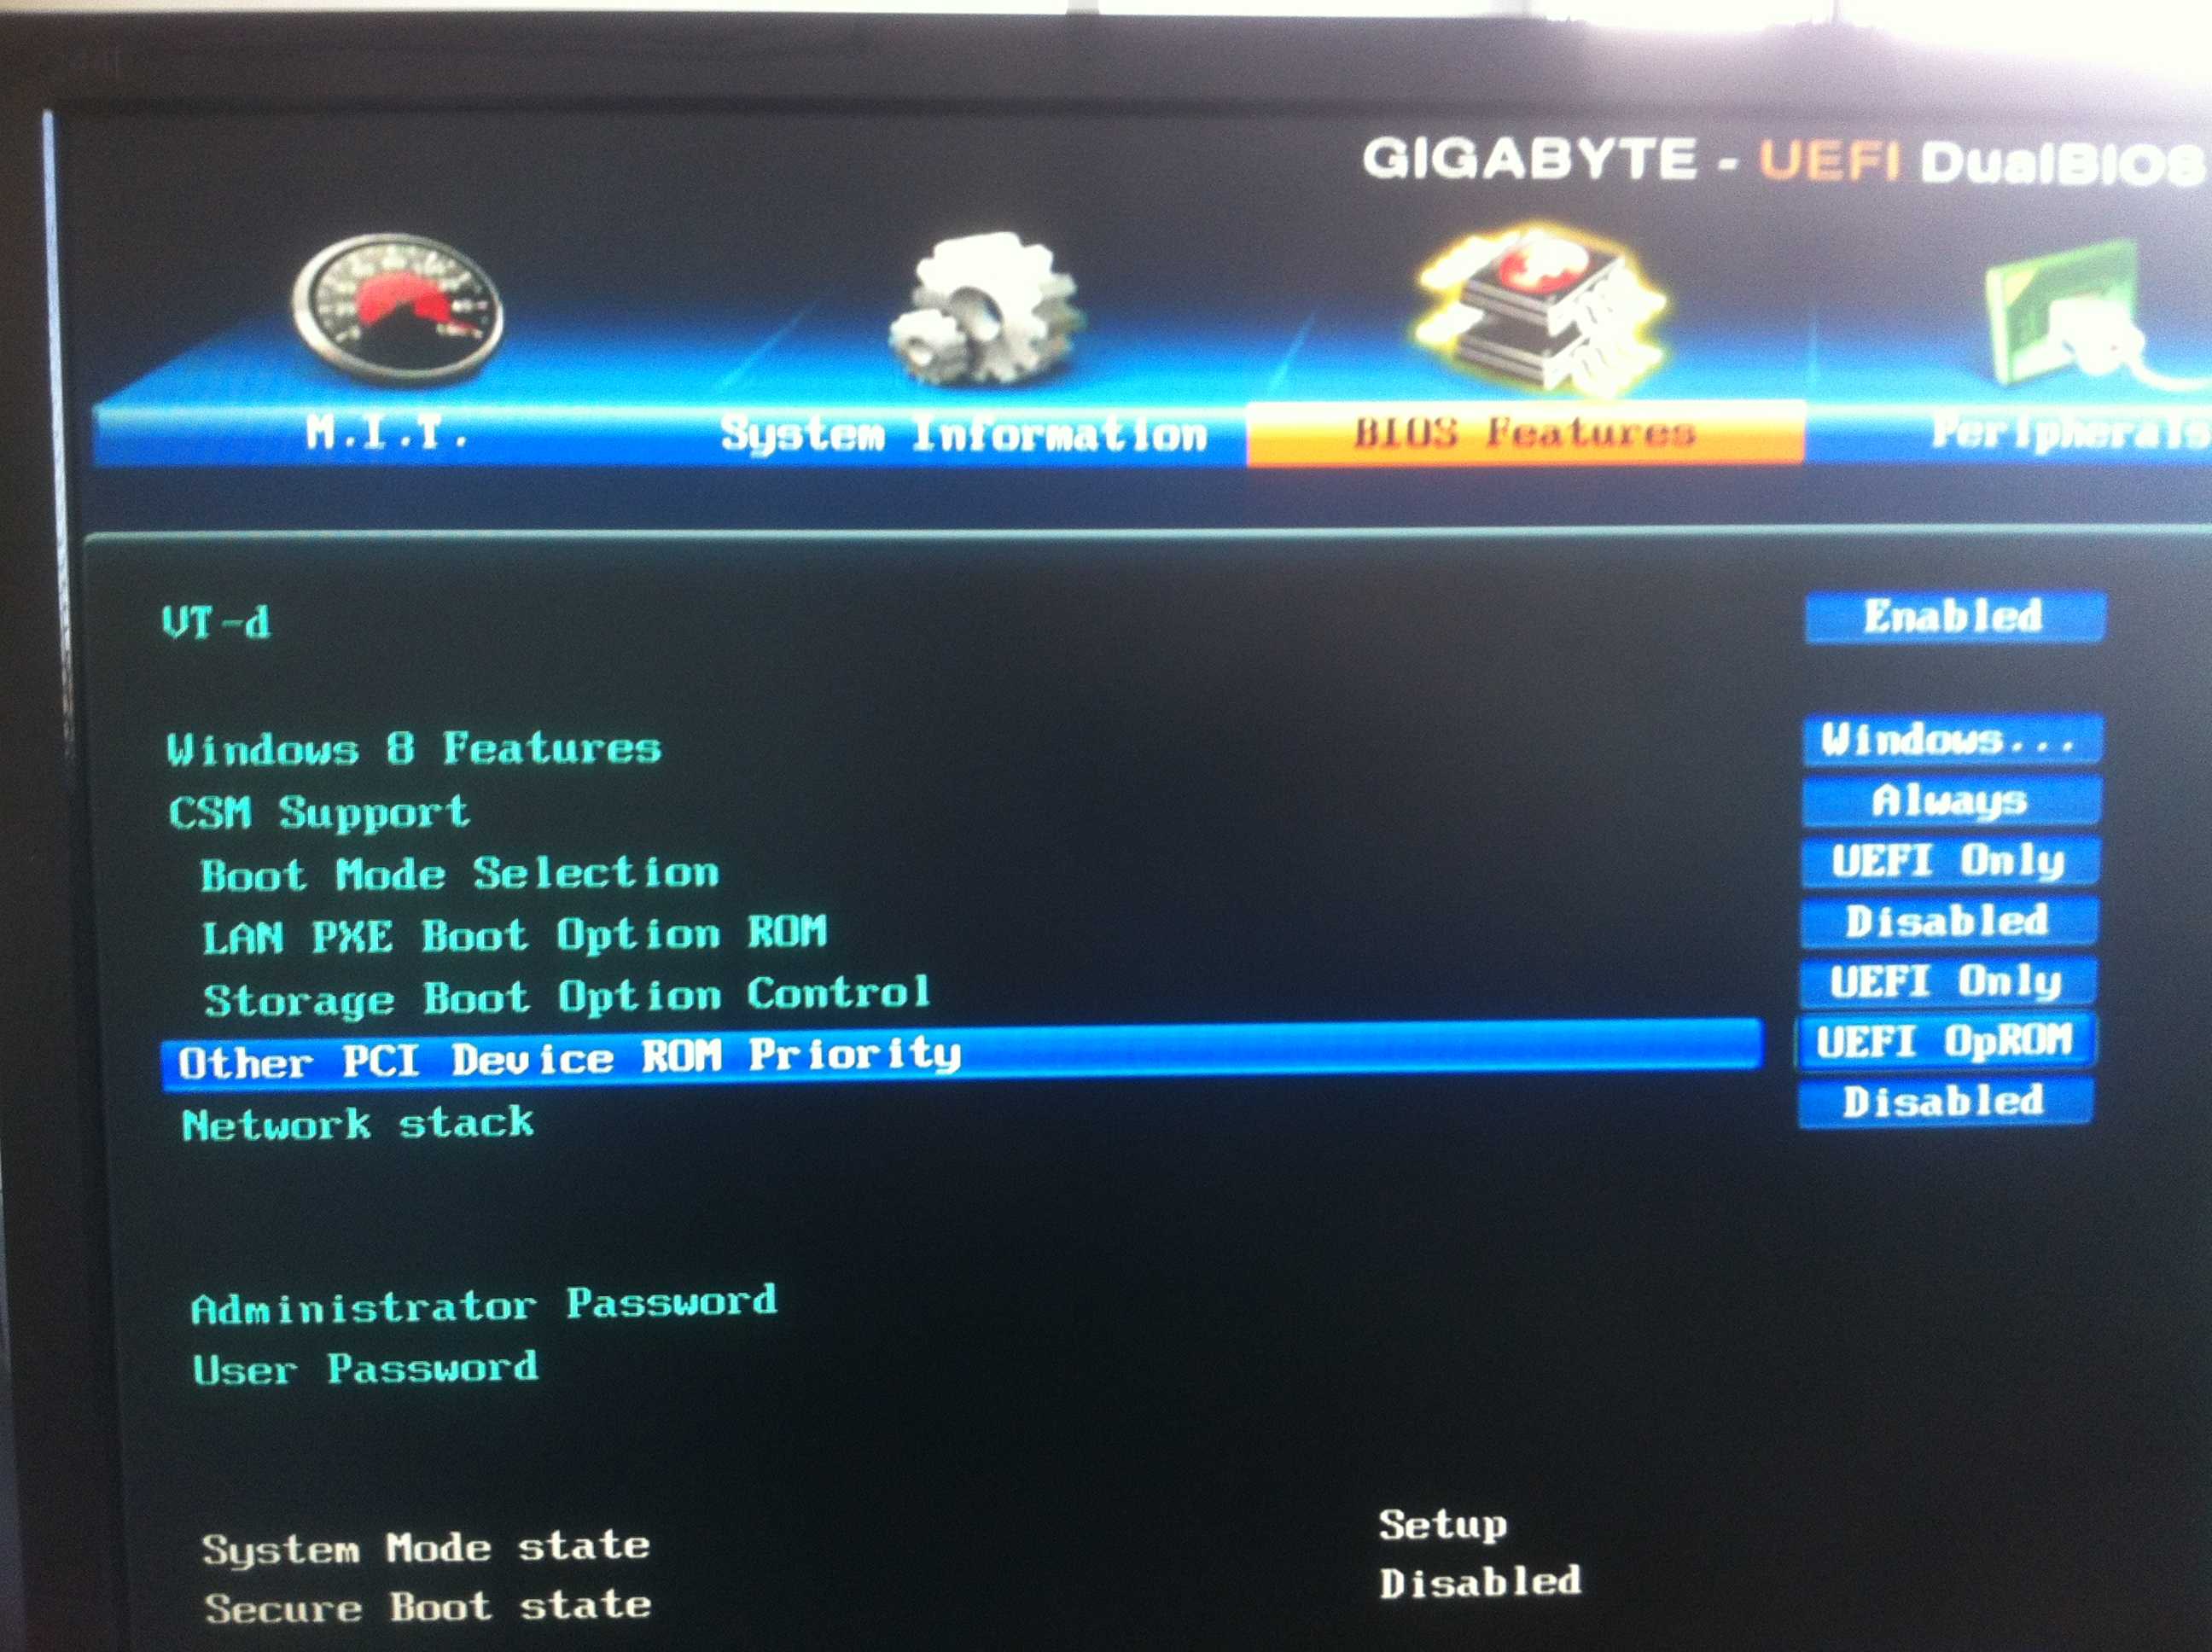 Uefi supported. Gigabyte UEFI BIOS Boot. UEFI/BIOS Boot Mode Gigabyte. BIOS Gigabyte Интерфейс. BIOS Gigabyte Boot.